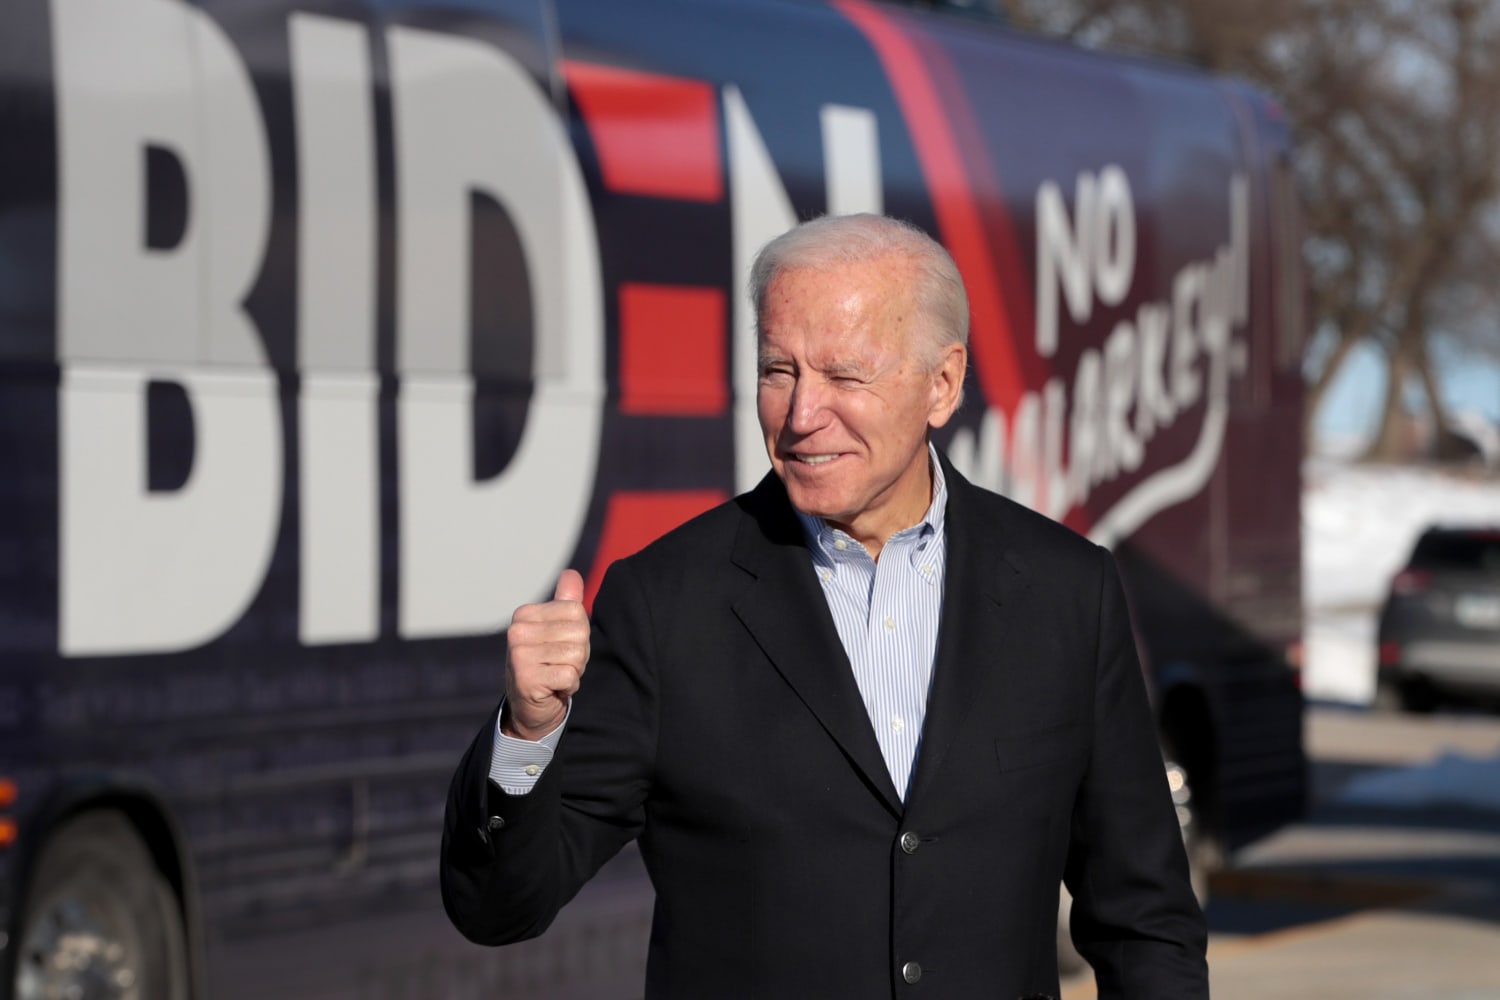 Malarkey Shirt Vote For Joe Joe Biden For President Shirt Democratic Candidate No More Malarkey Biden 2020 T-Shirt Biden Tee